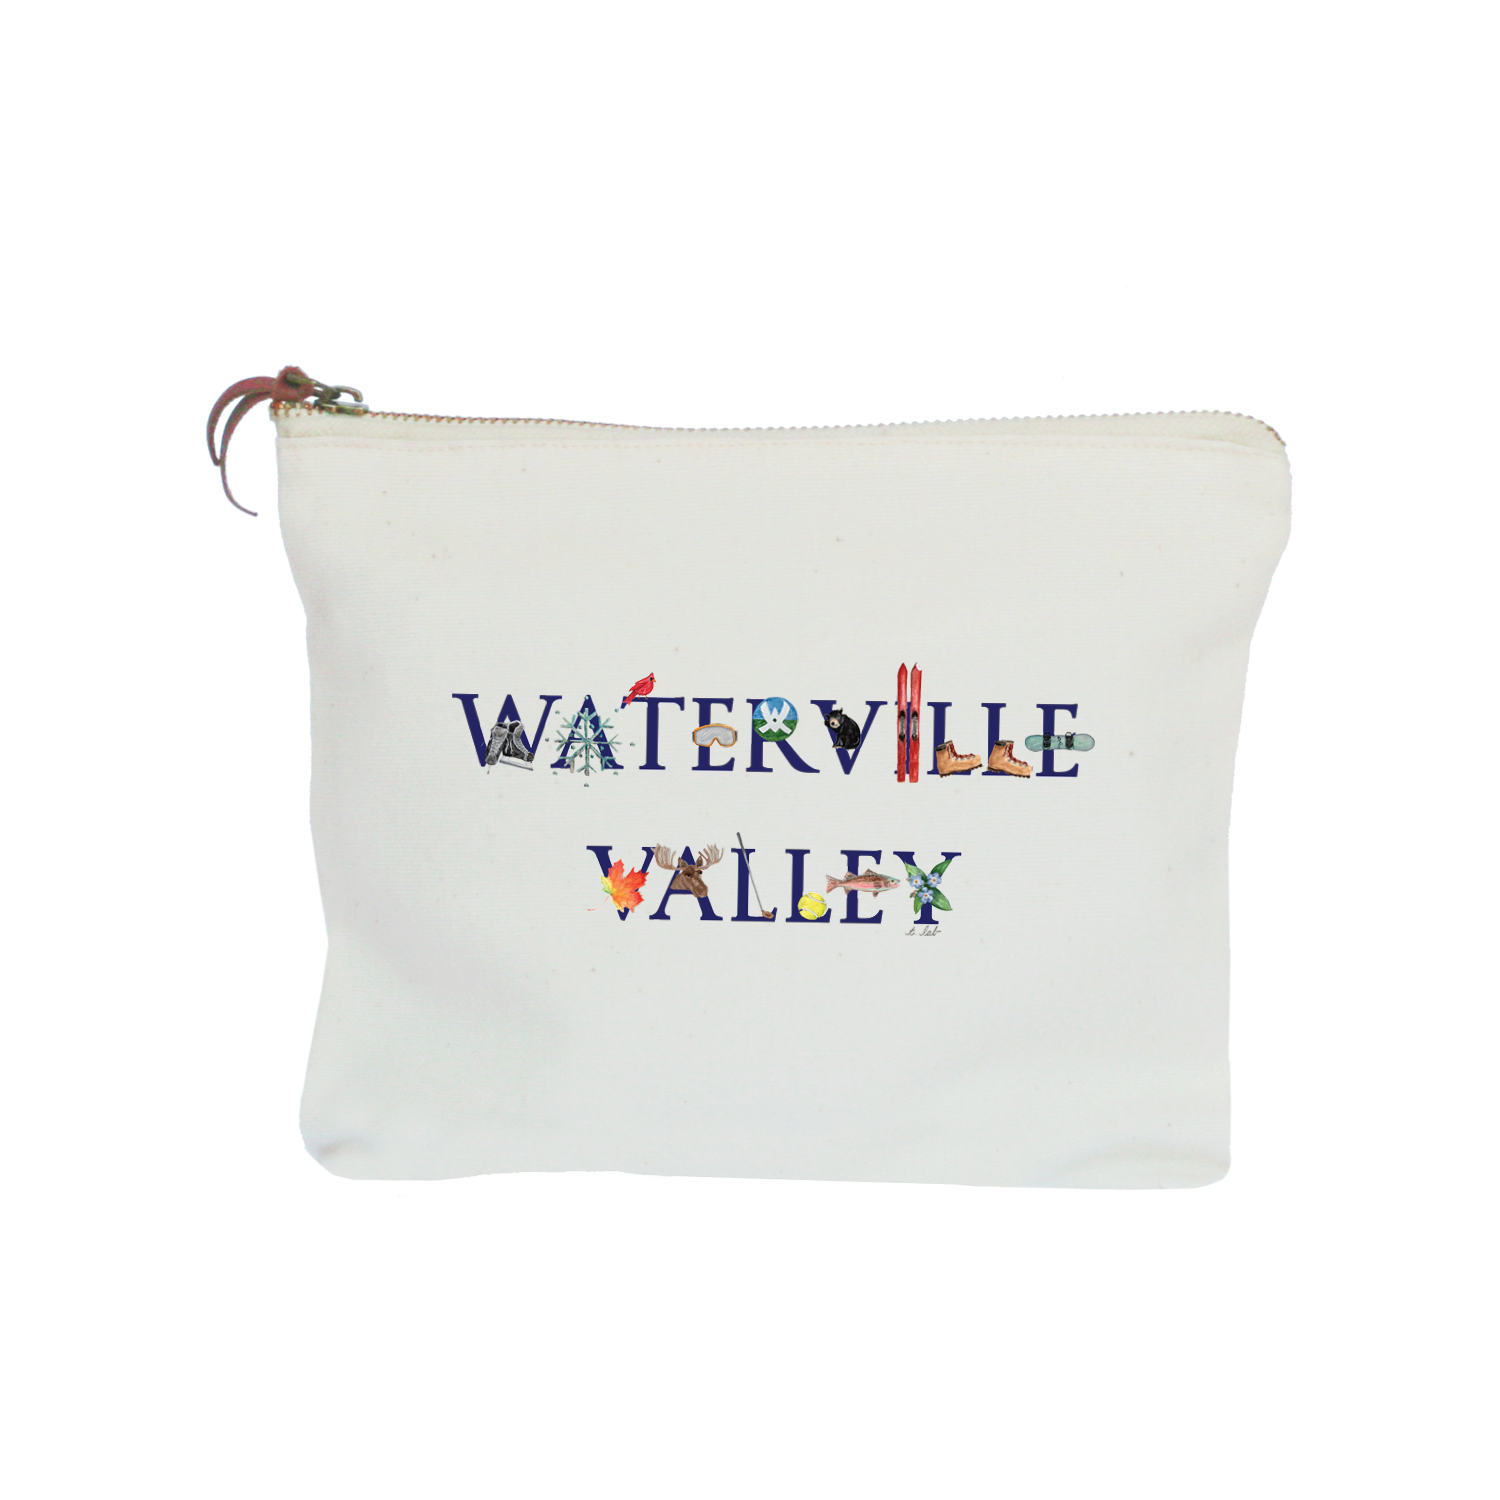 waterville valley zipper pouch